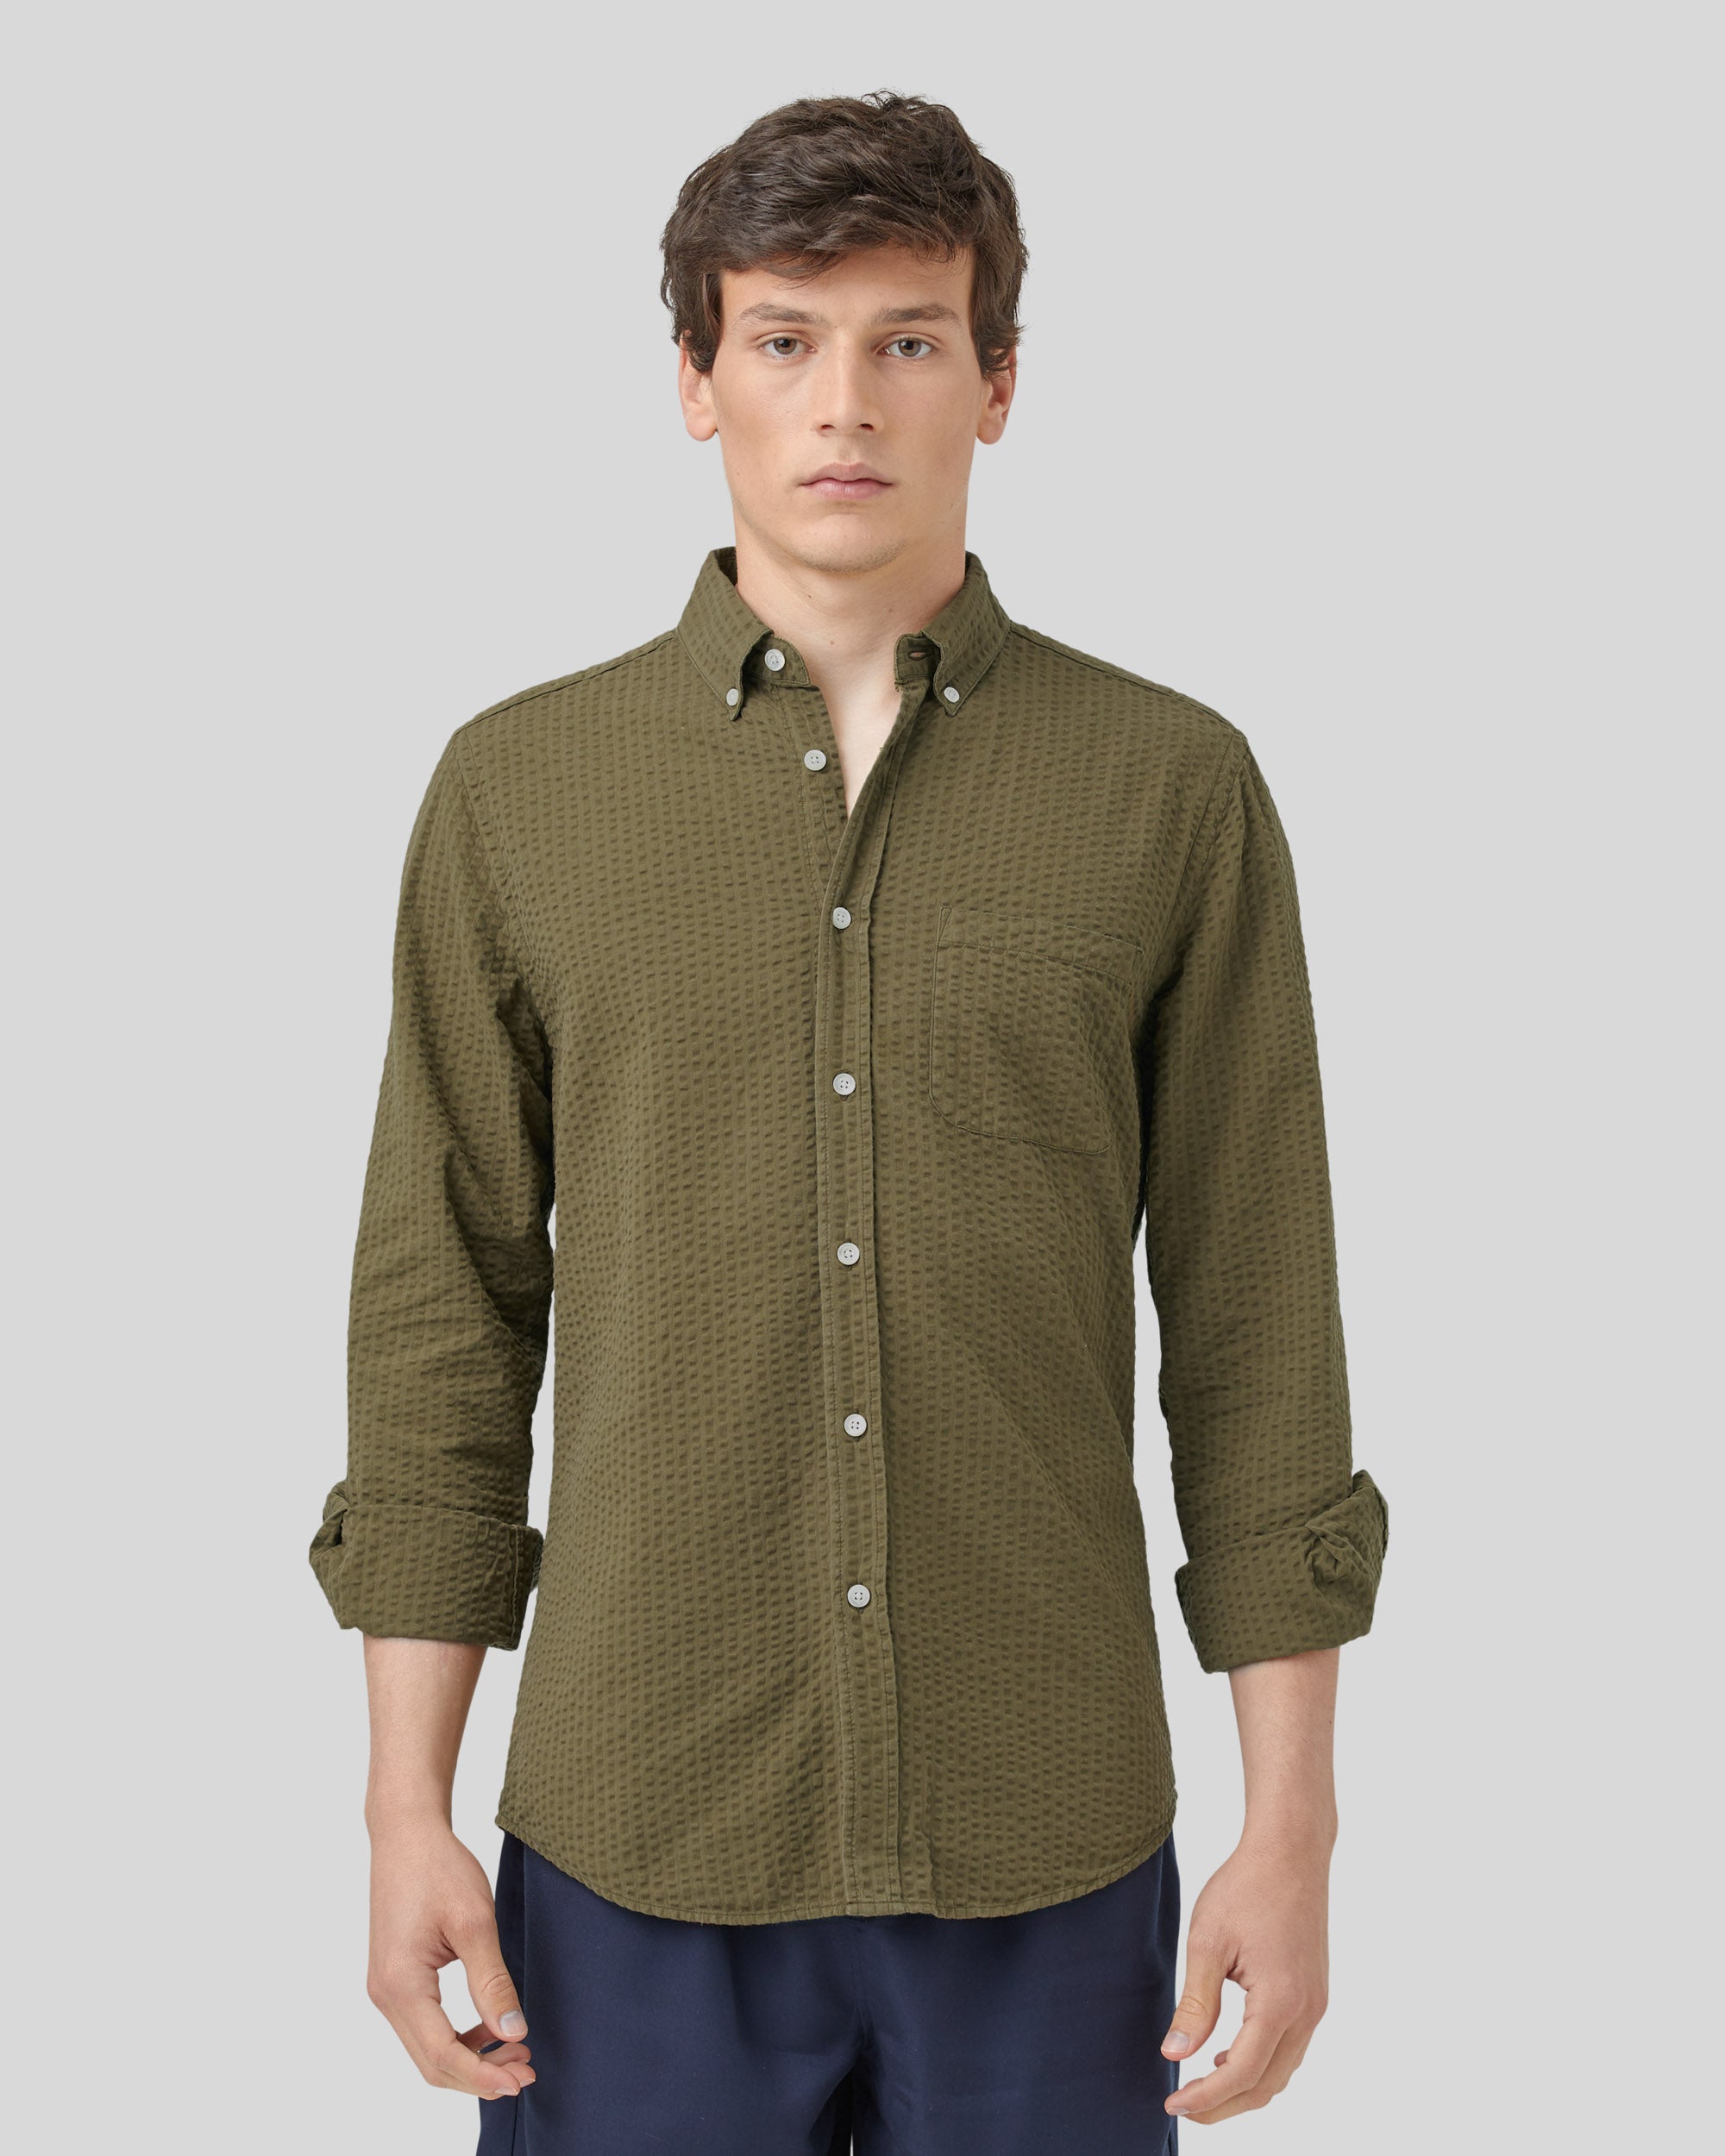 Atlantico Shirt - Olive